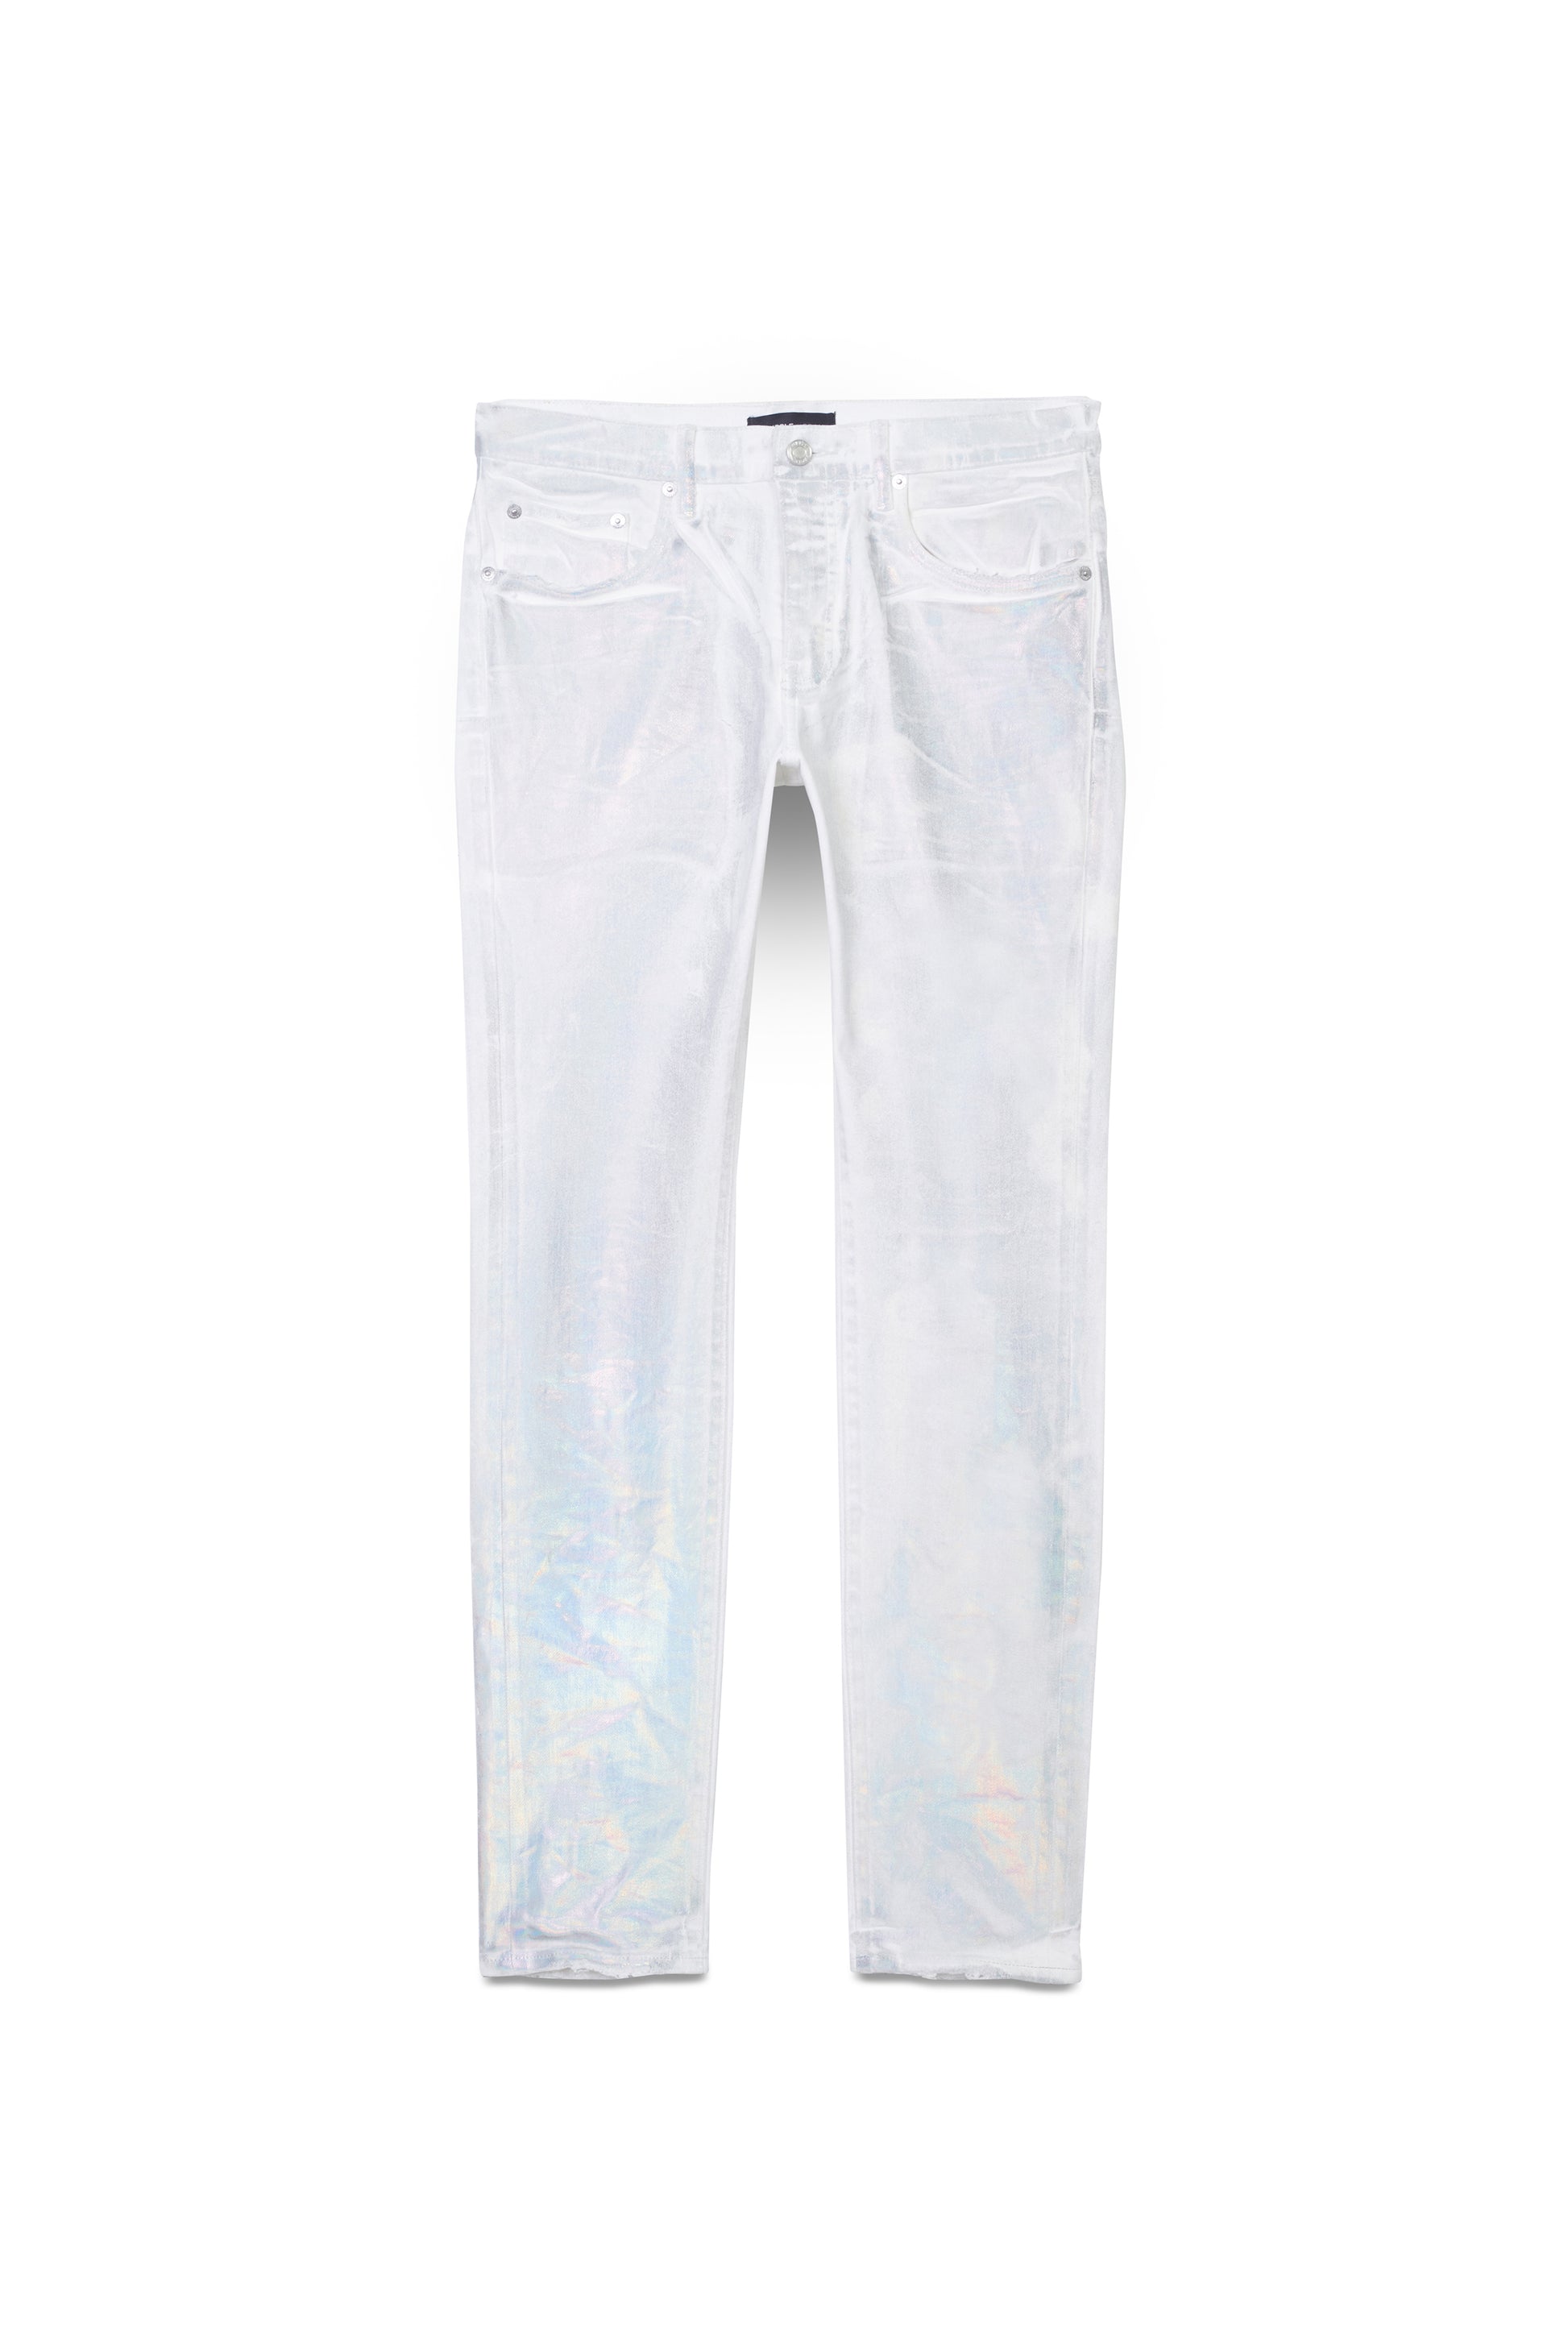 Buy PURPLE BRAND Low Rise Skinny Jeans 'White Film/Monogram' - P001 WFMJ223